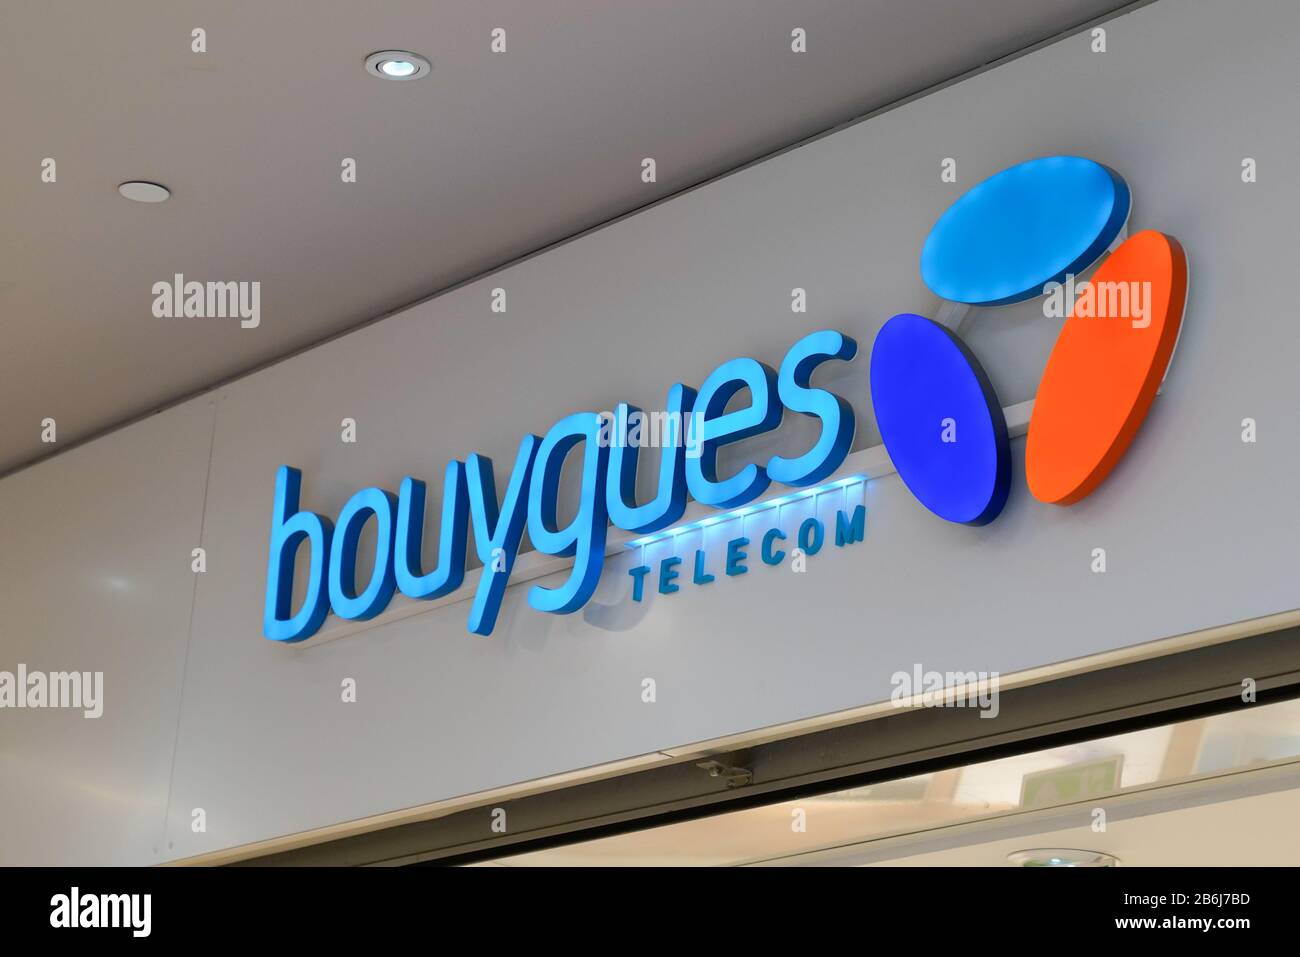 Bordeaux , Aquitaine / France - 09 23 2019 : shop sign logo brand Bouygues telecom phone operator store Stock Photo